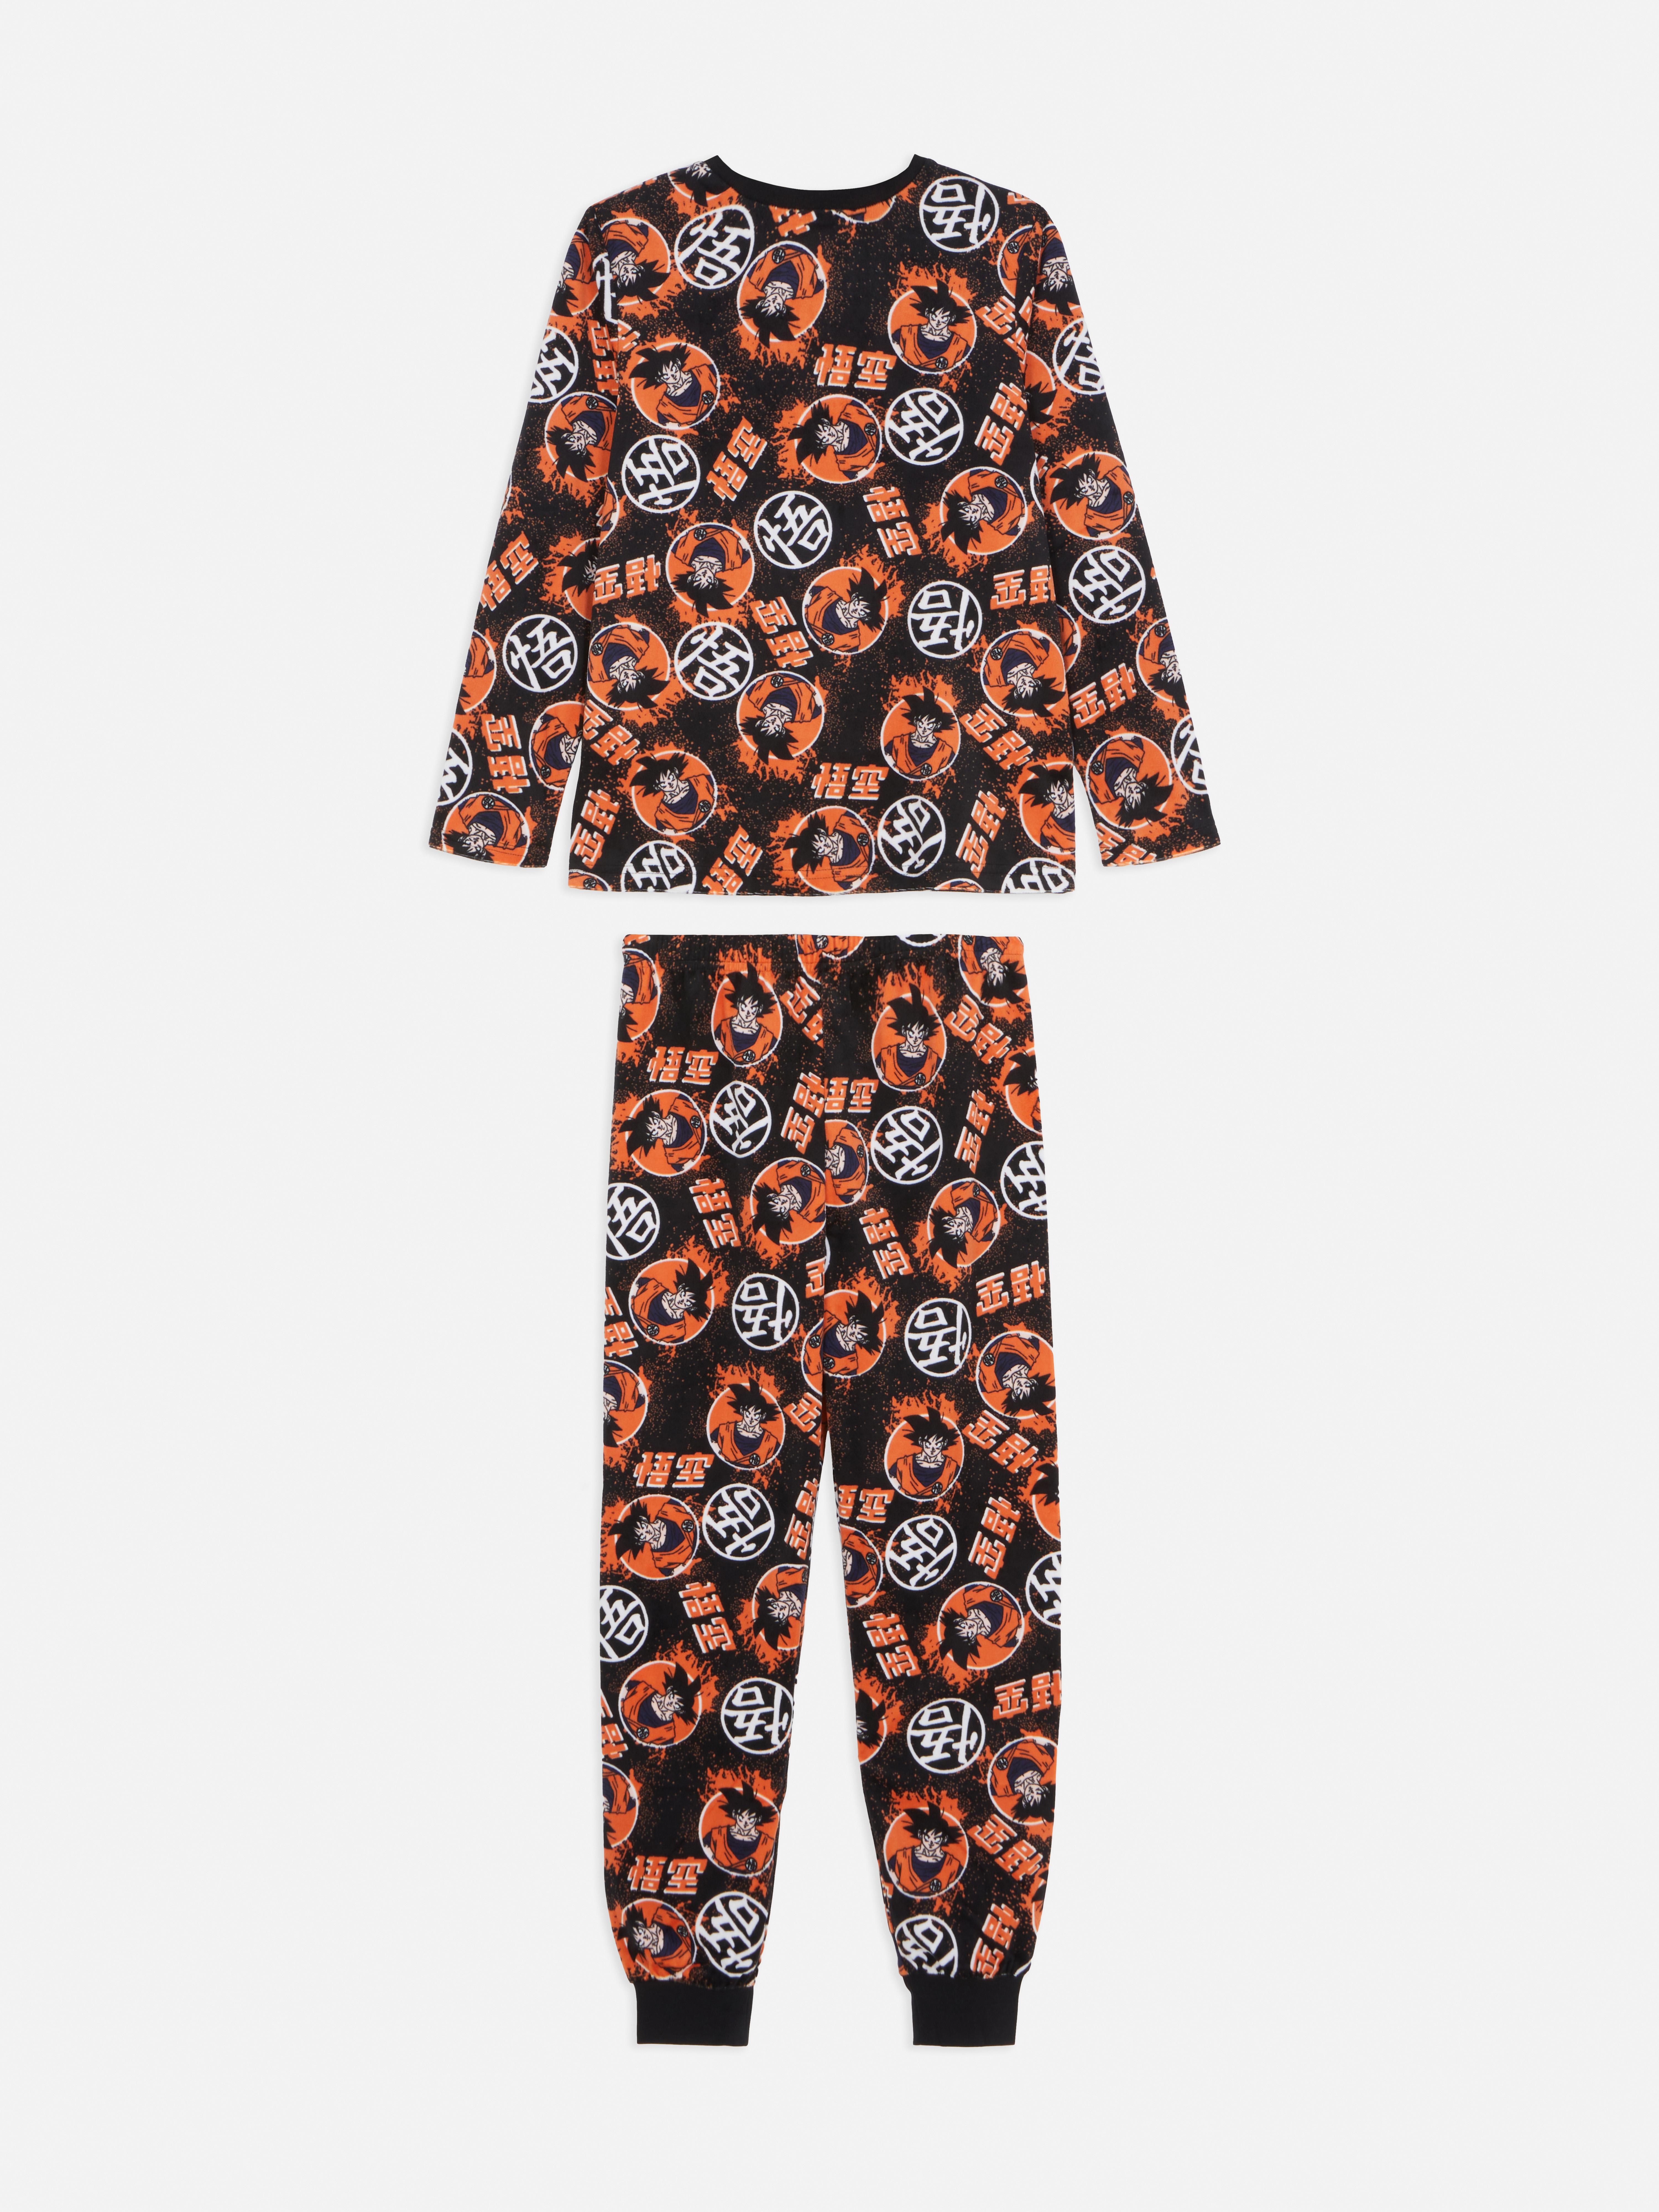 Dragon Ball Z Boys Short Sleeve Long Leg Pyjama Set Grey Goku